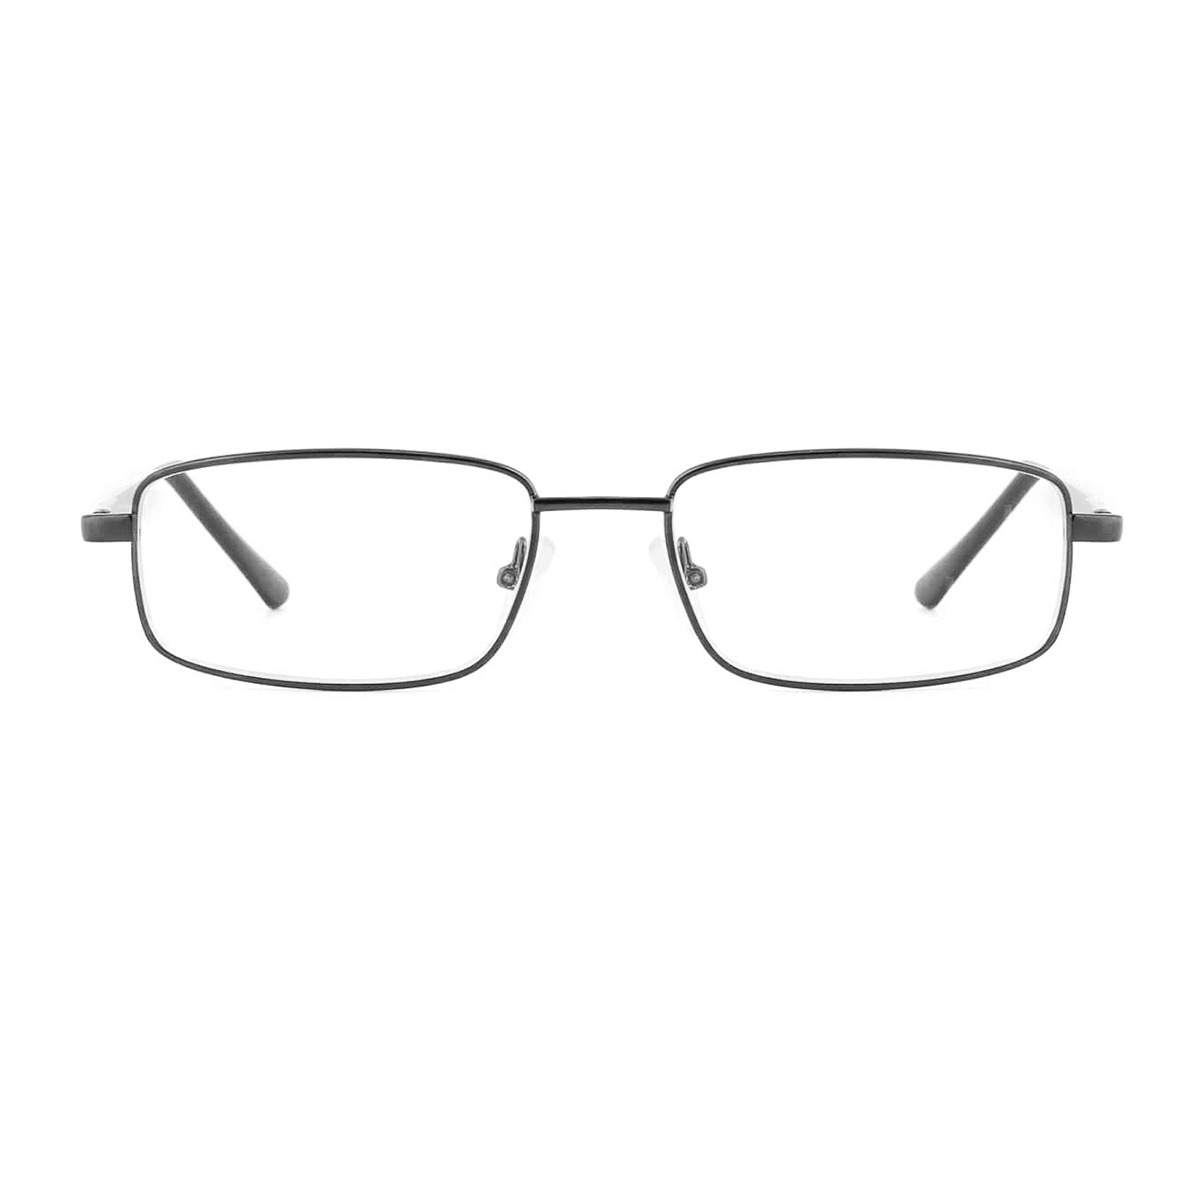 rectangle brown eyeglasses